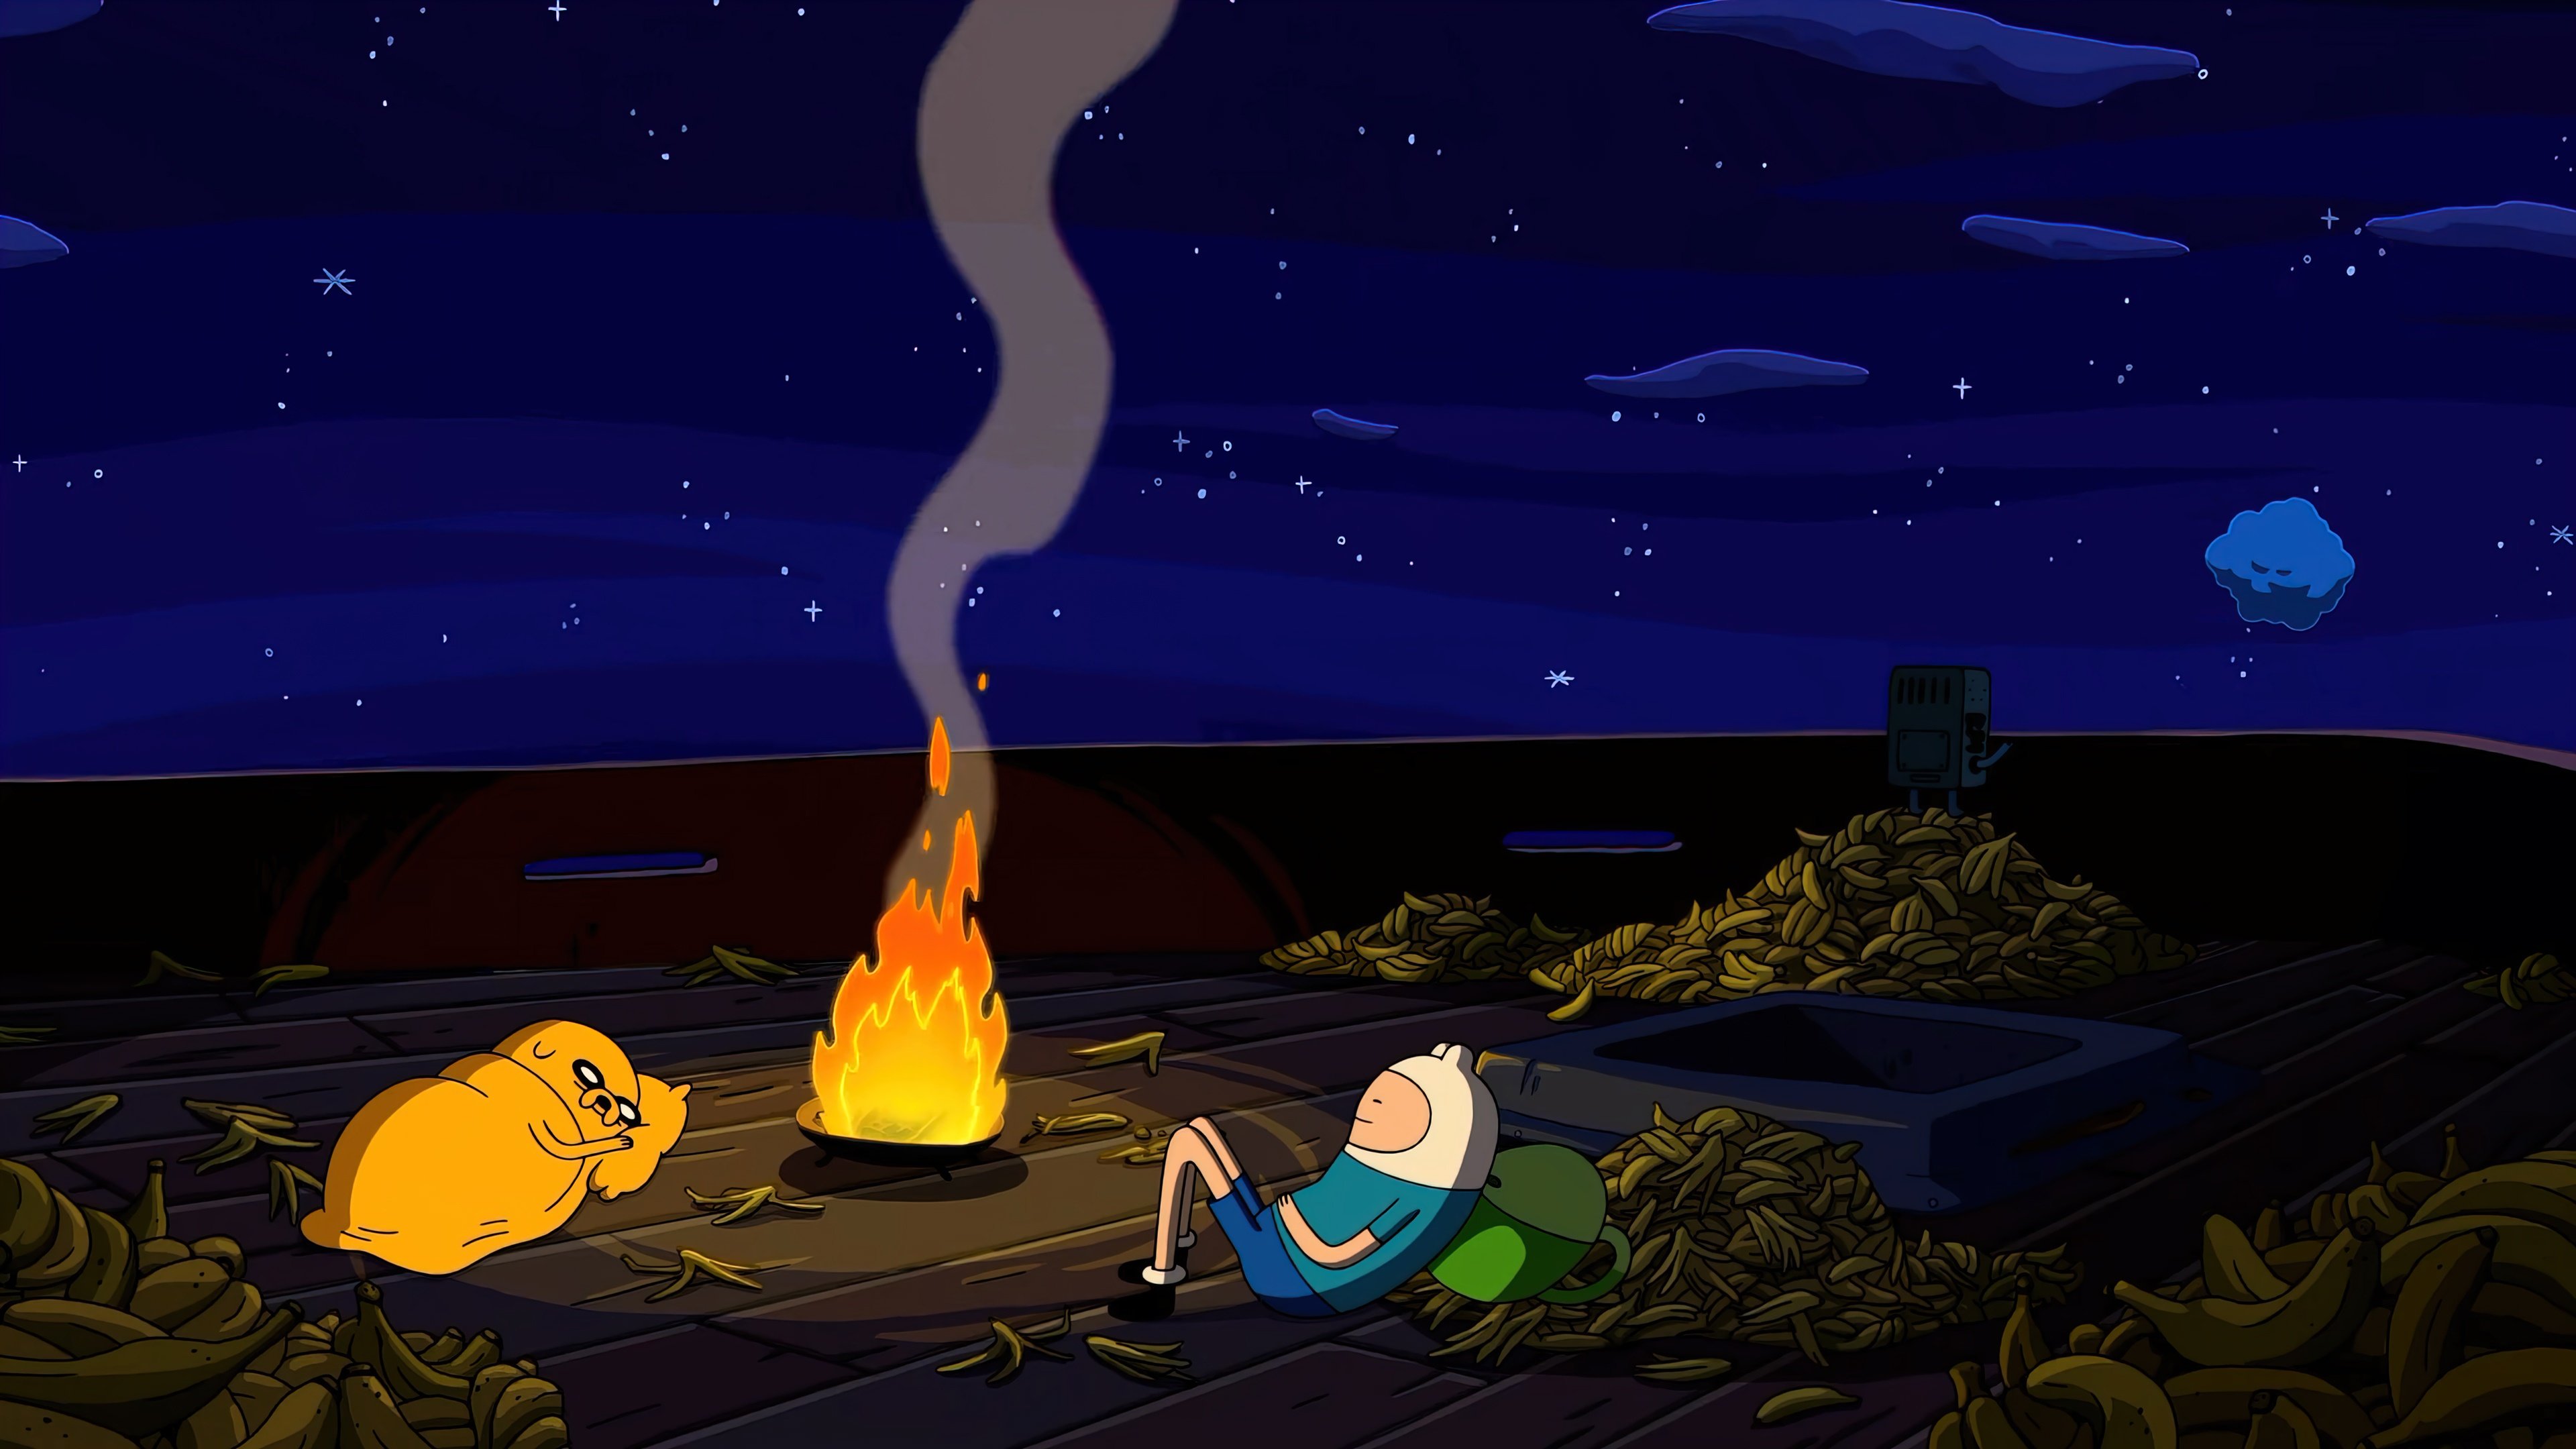 Download Adventure Time Wallpaper